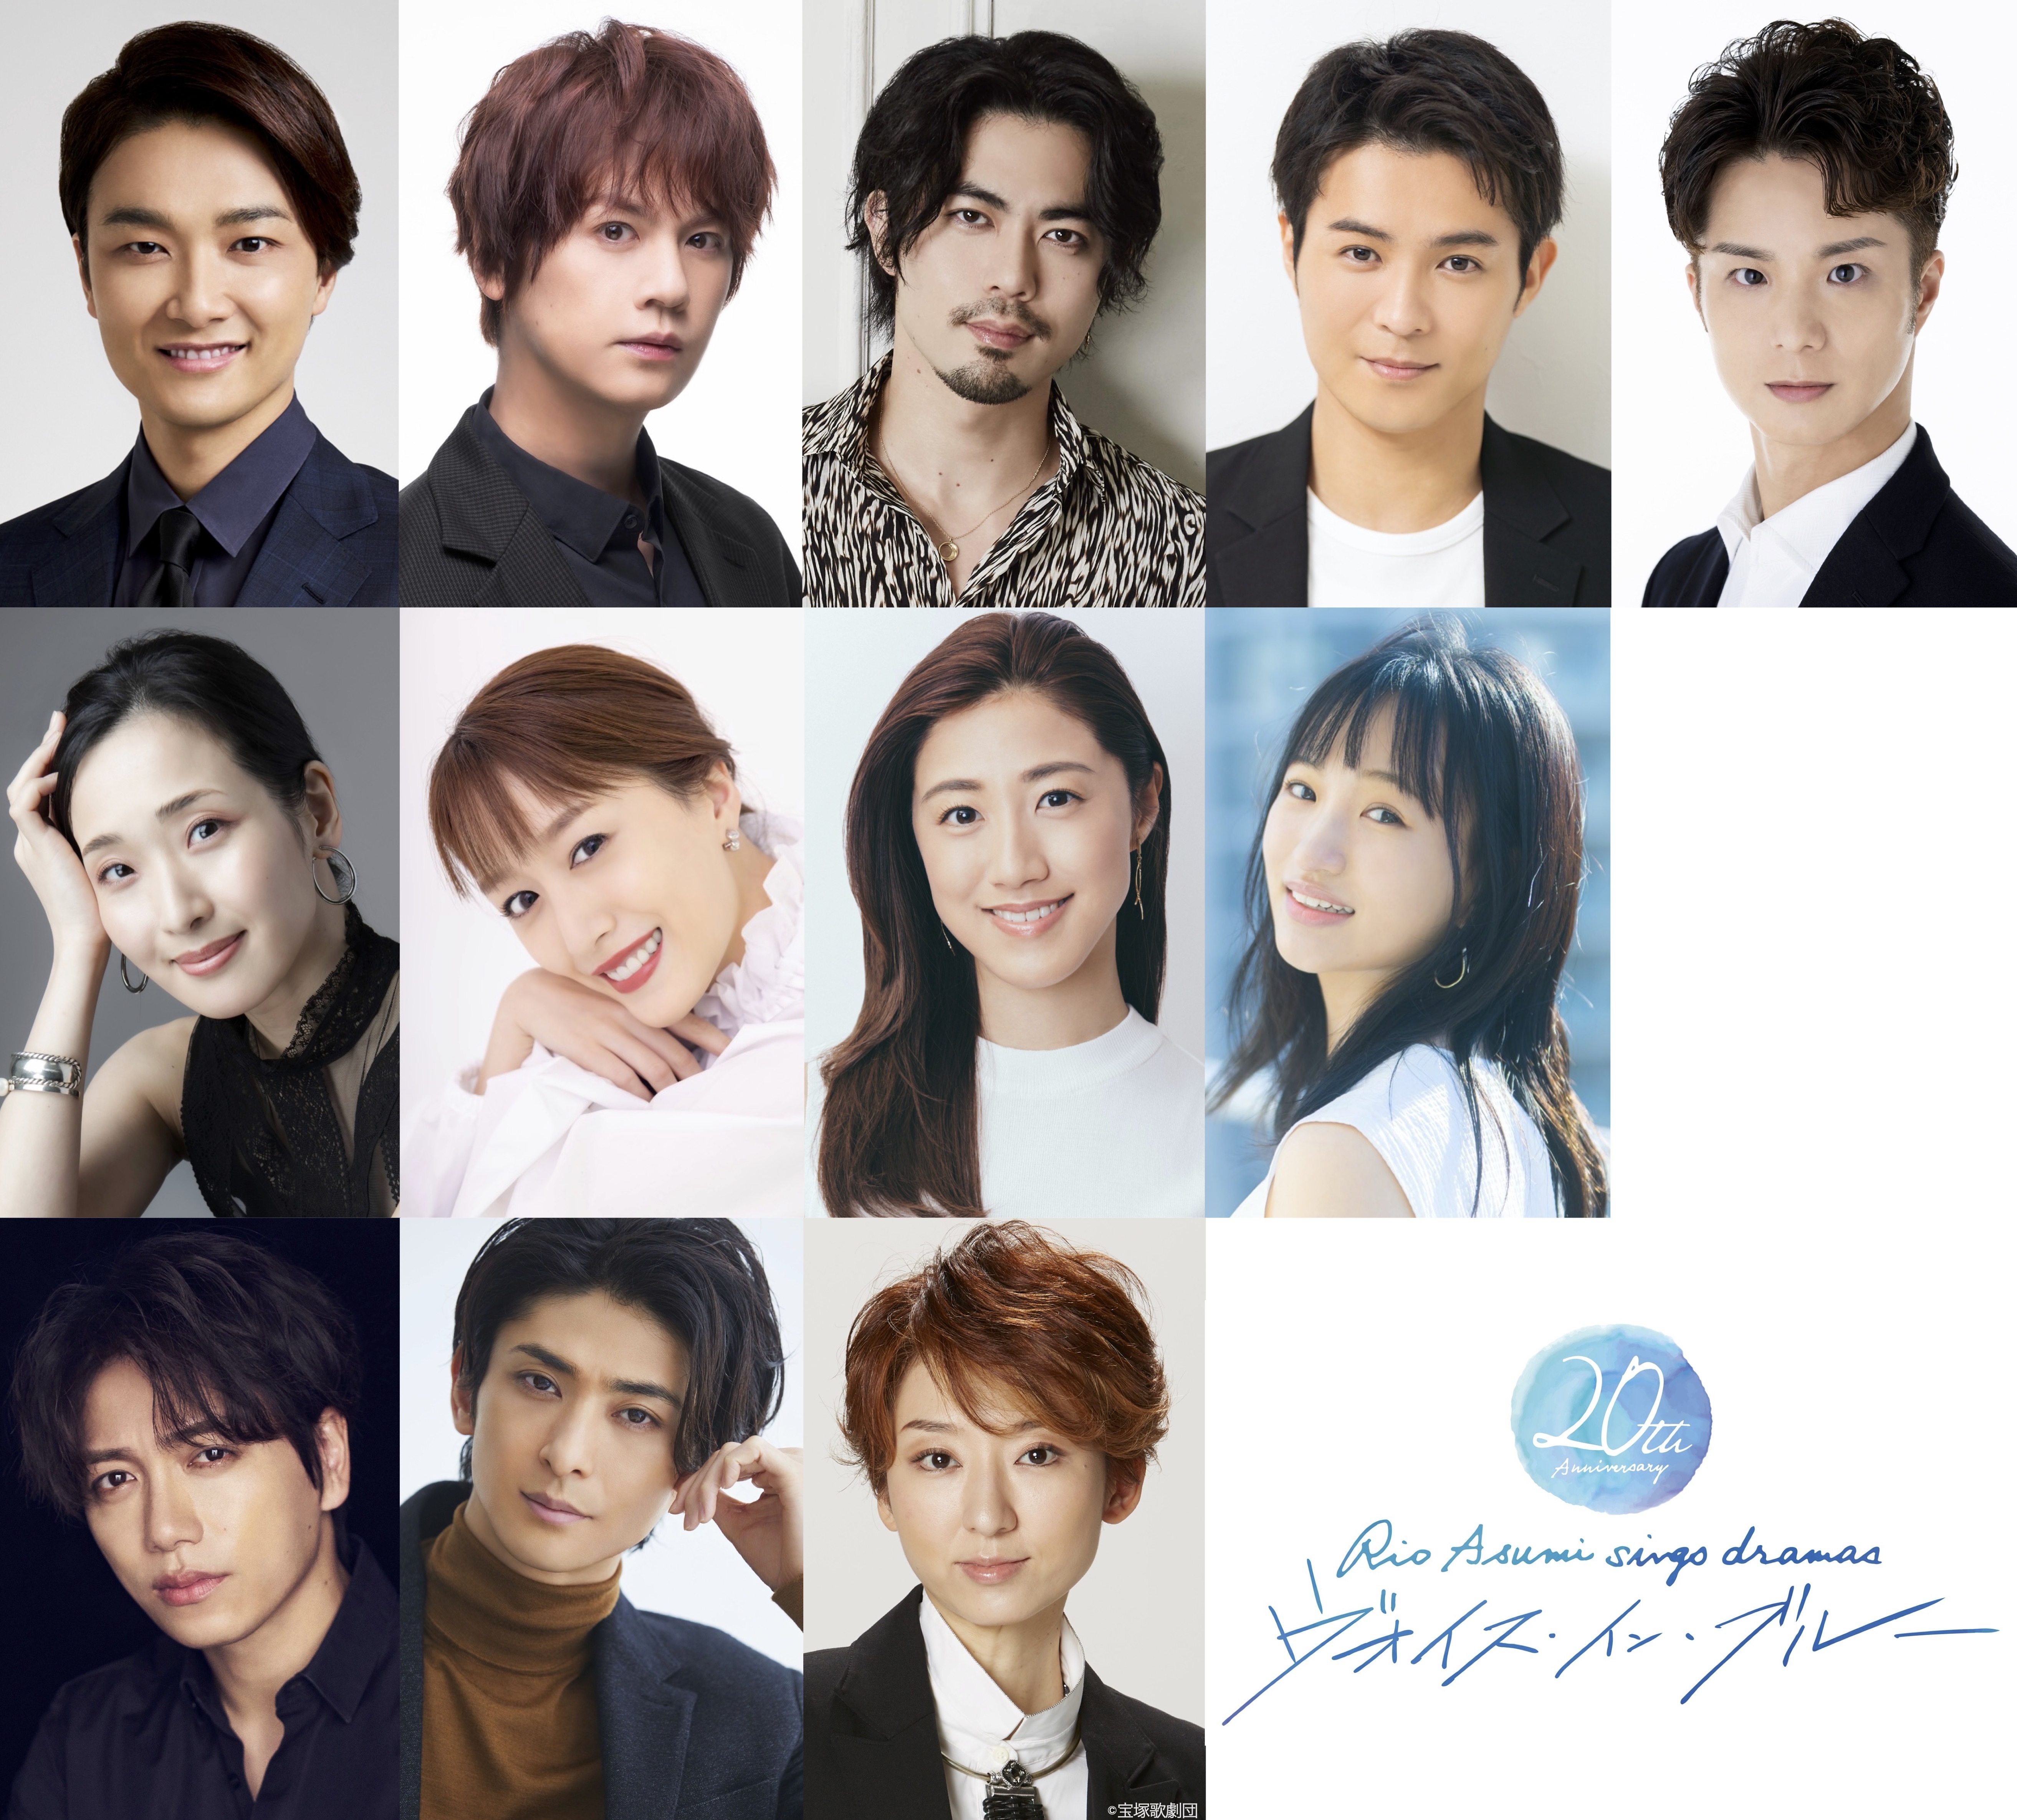 20th Anniversary Rio Asumi sings dramas 『ヴォイス・イン・ブルー 